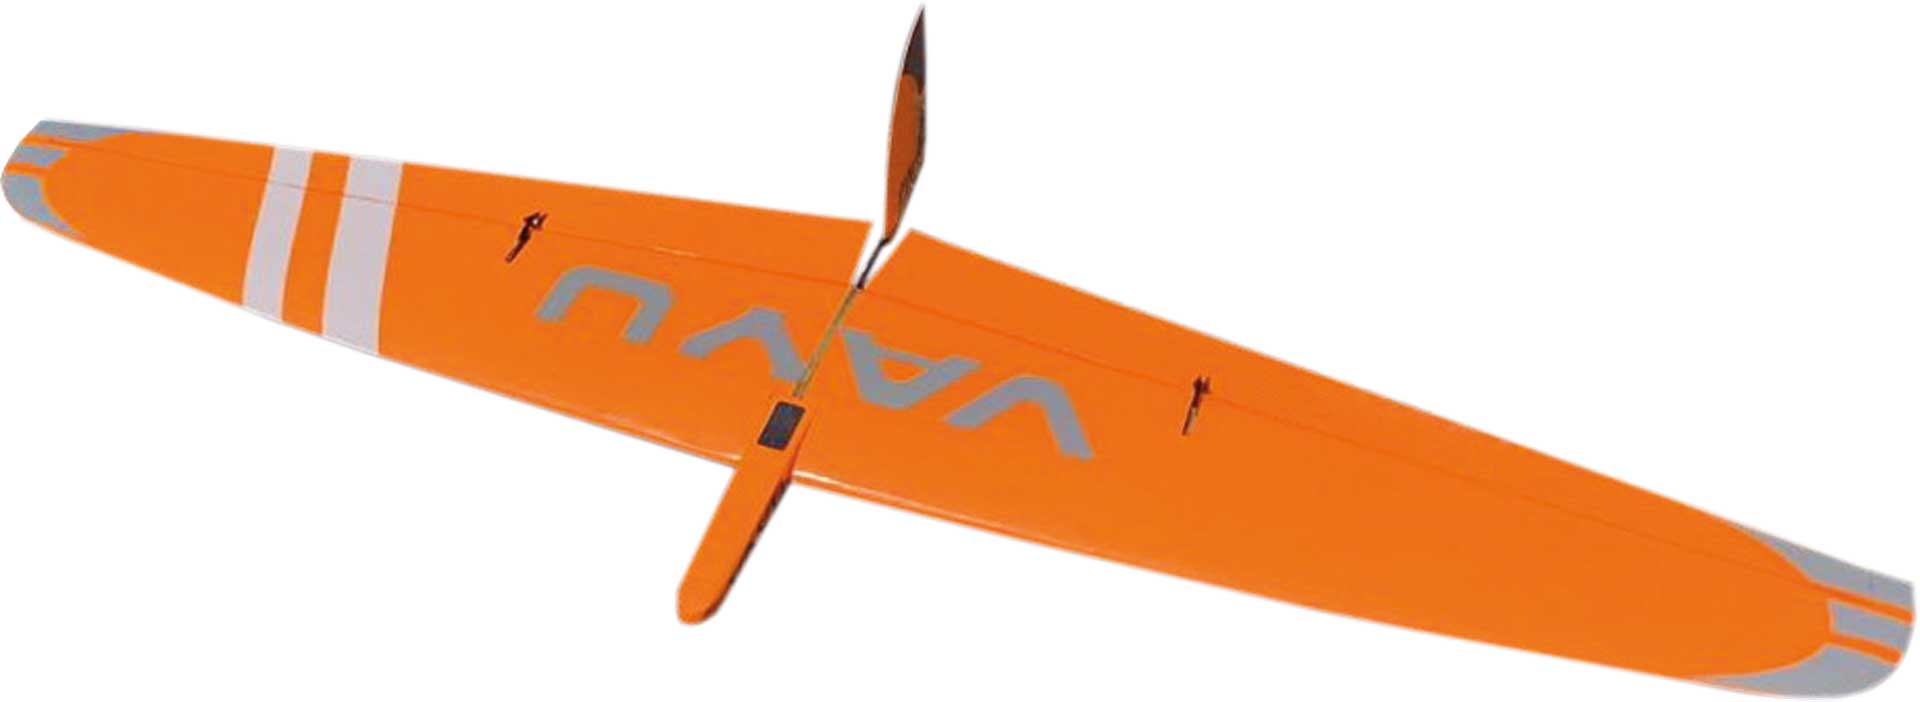 Robbe Modellsport VAYU flying wing model wooden kit in innovative plywood construction